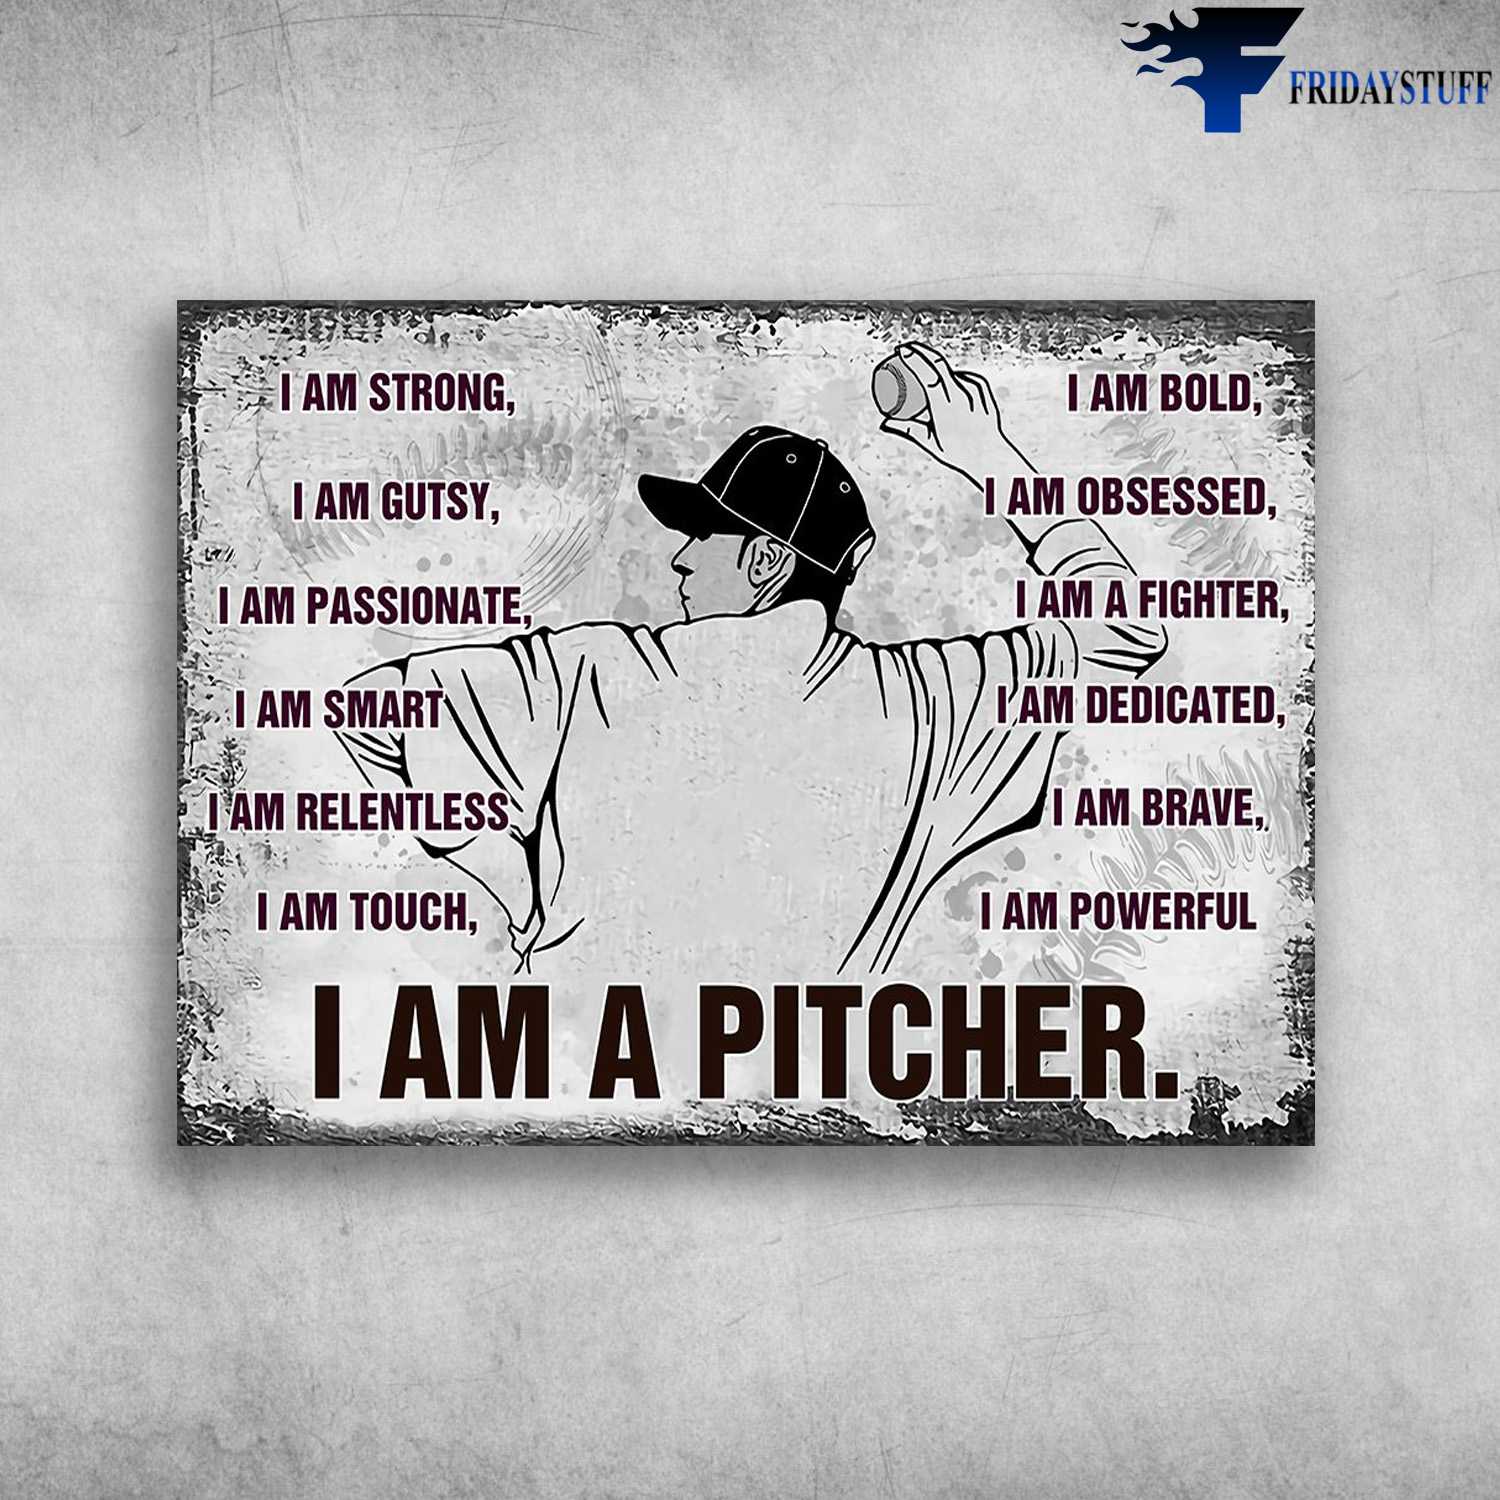 Baseball Player - I Am Strong, I Am Gutsy, I Am Passionate, I Am Smart, I Am Relentless, I Am Touch, I Am A Pitcher